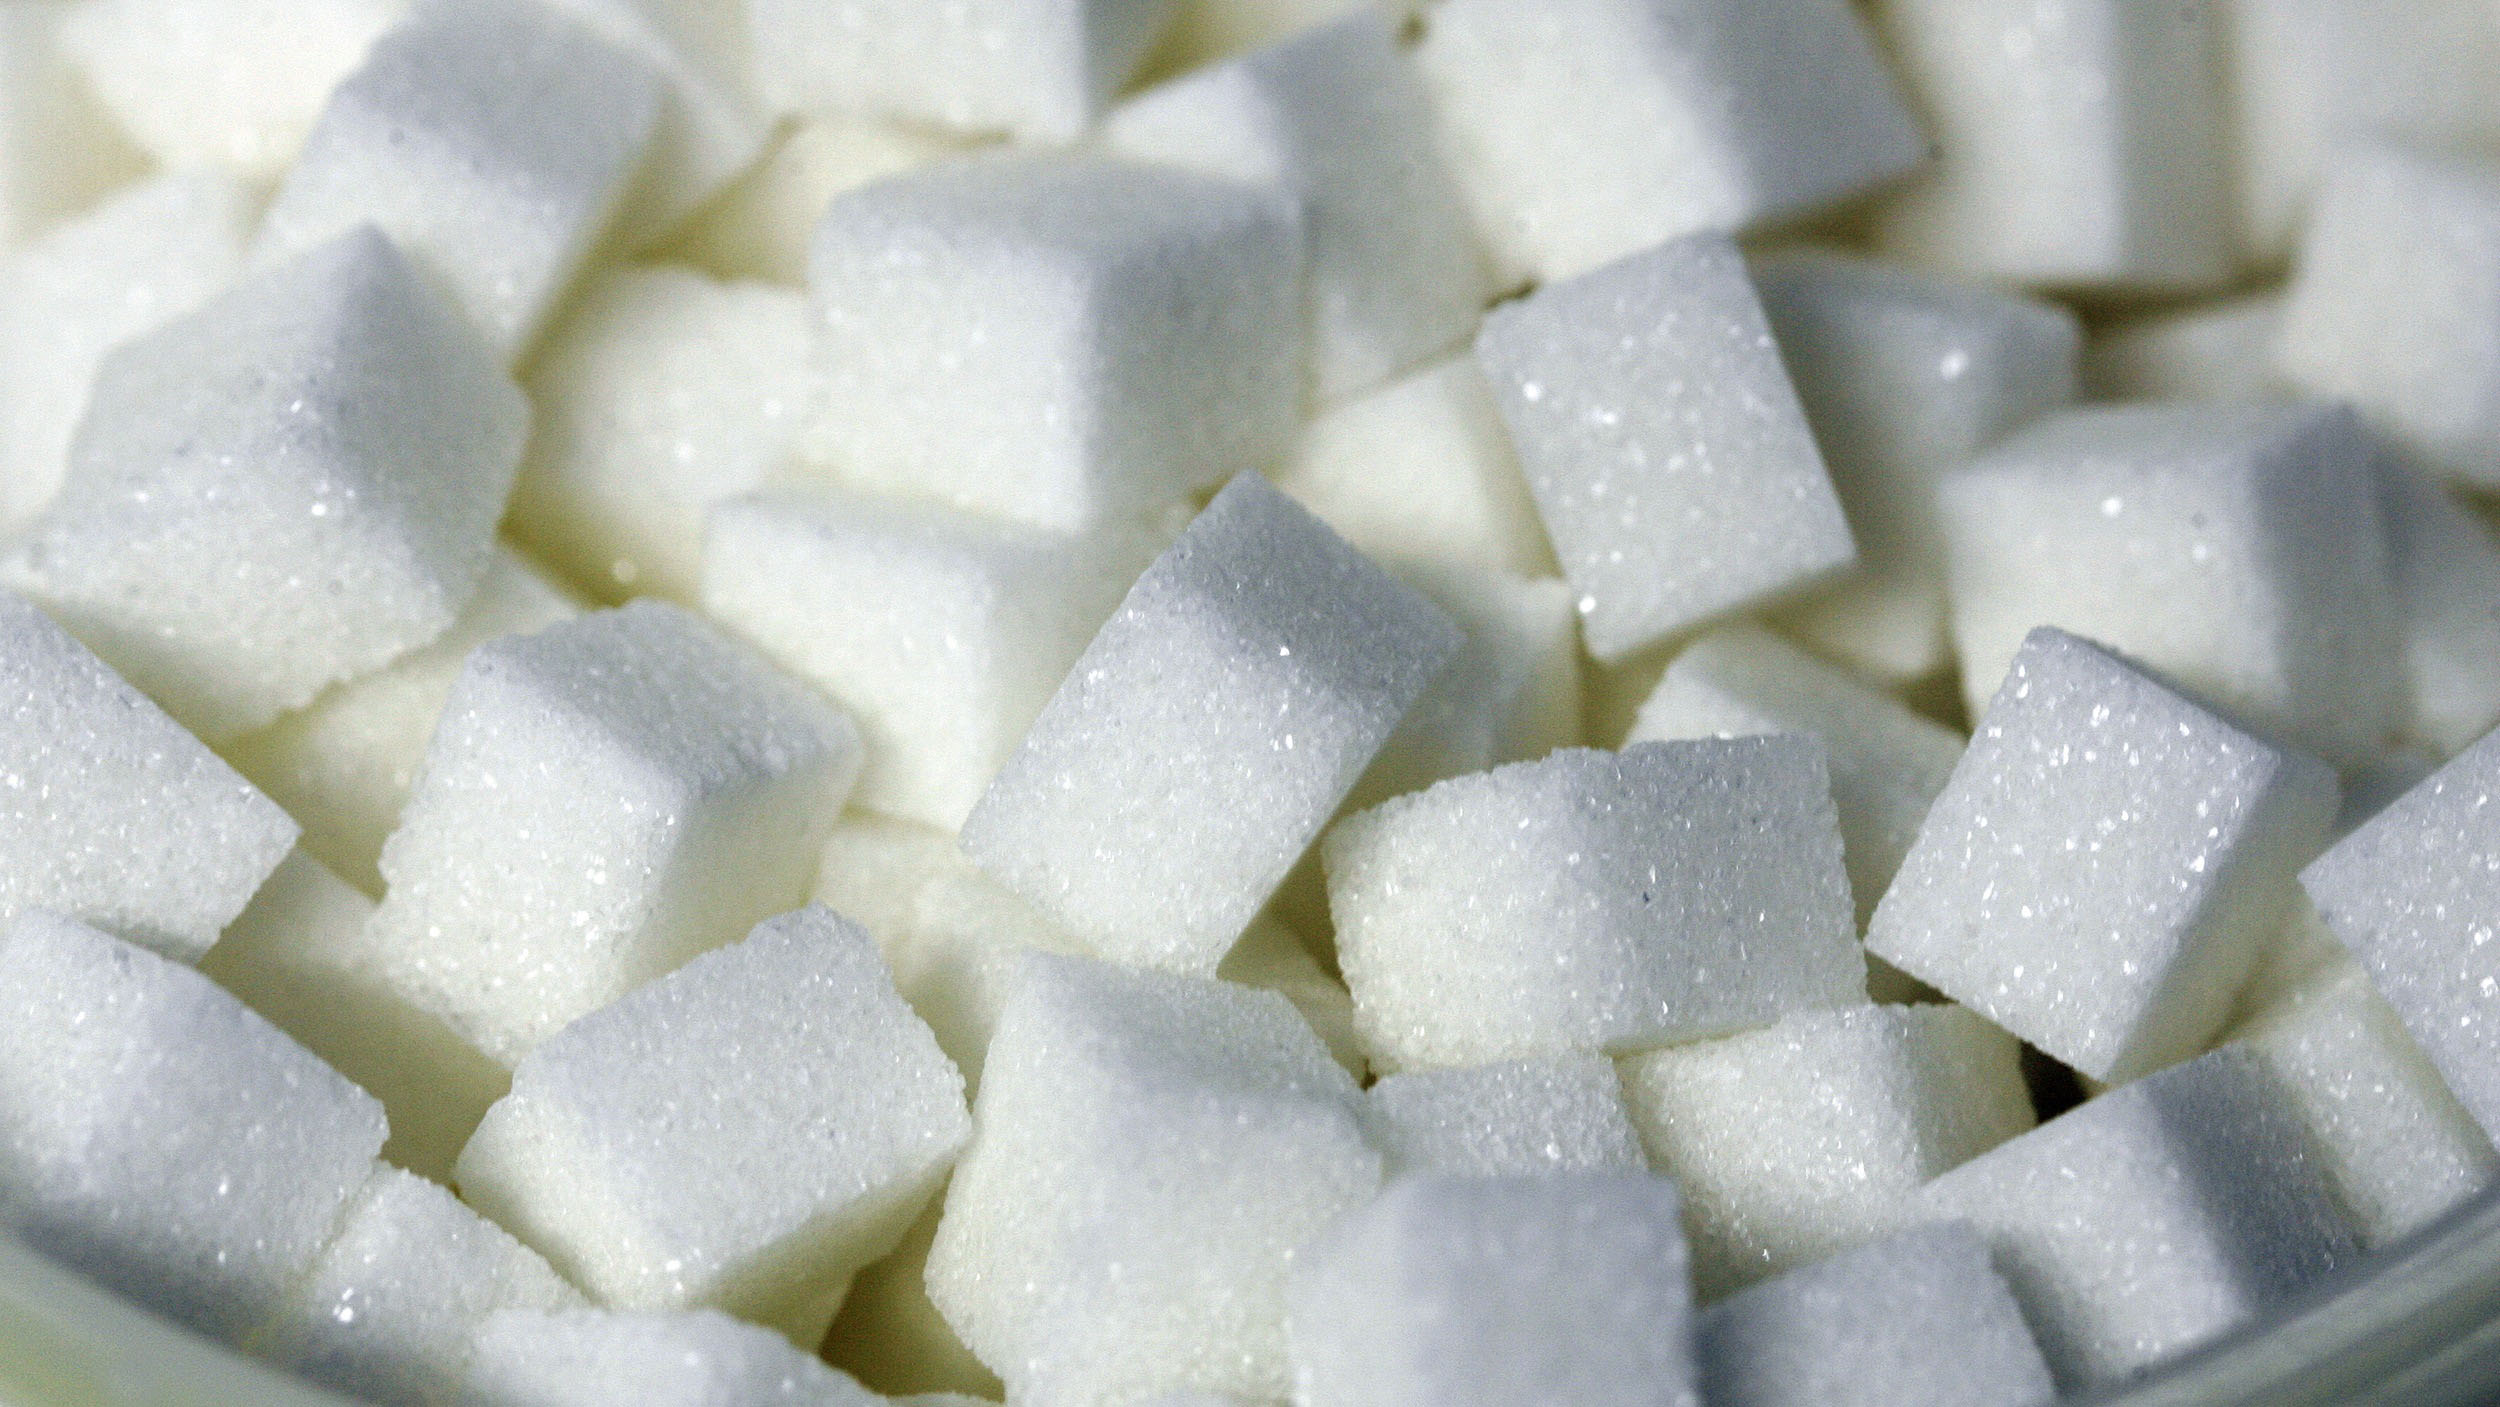 Sugar rehab: New treatment for not-so-sweet addiction